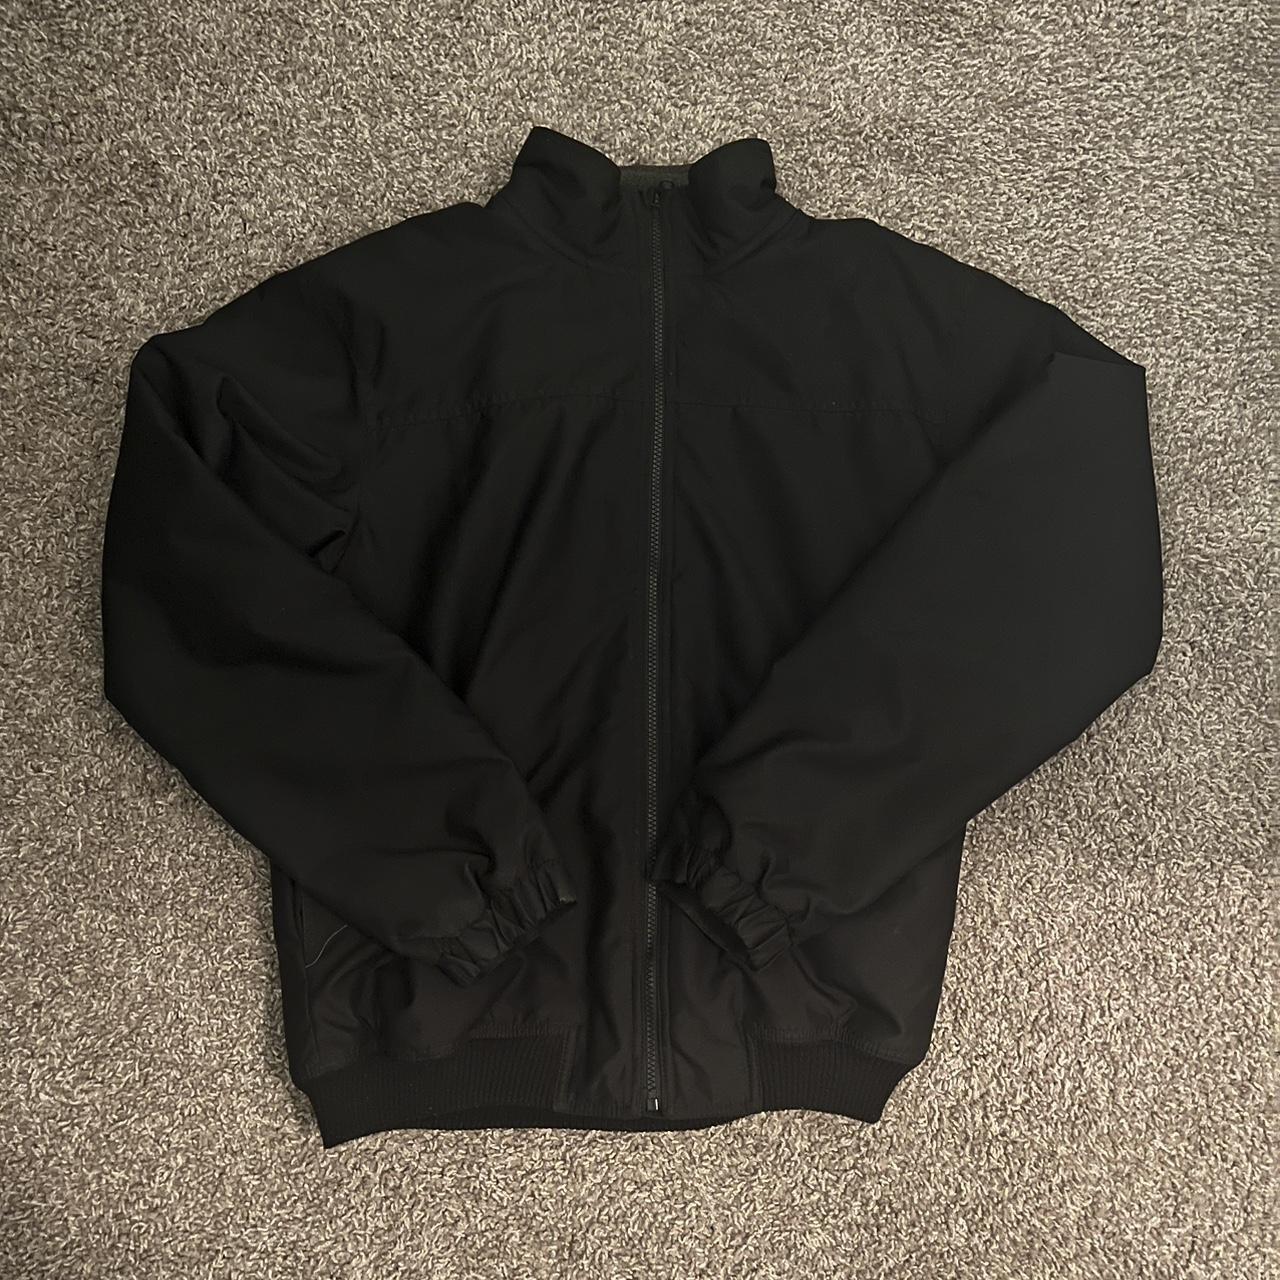 Black chaps work jacket size: medium worn once - Depop